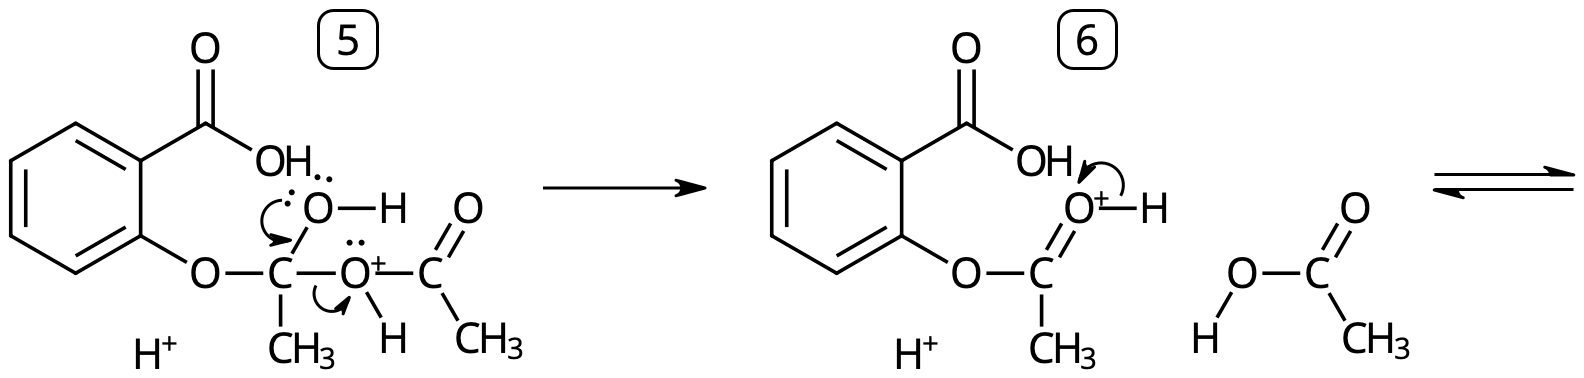 salicylsyra attiksyraanhydrid acetylsalicylsyra reaktionsmekanism 3